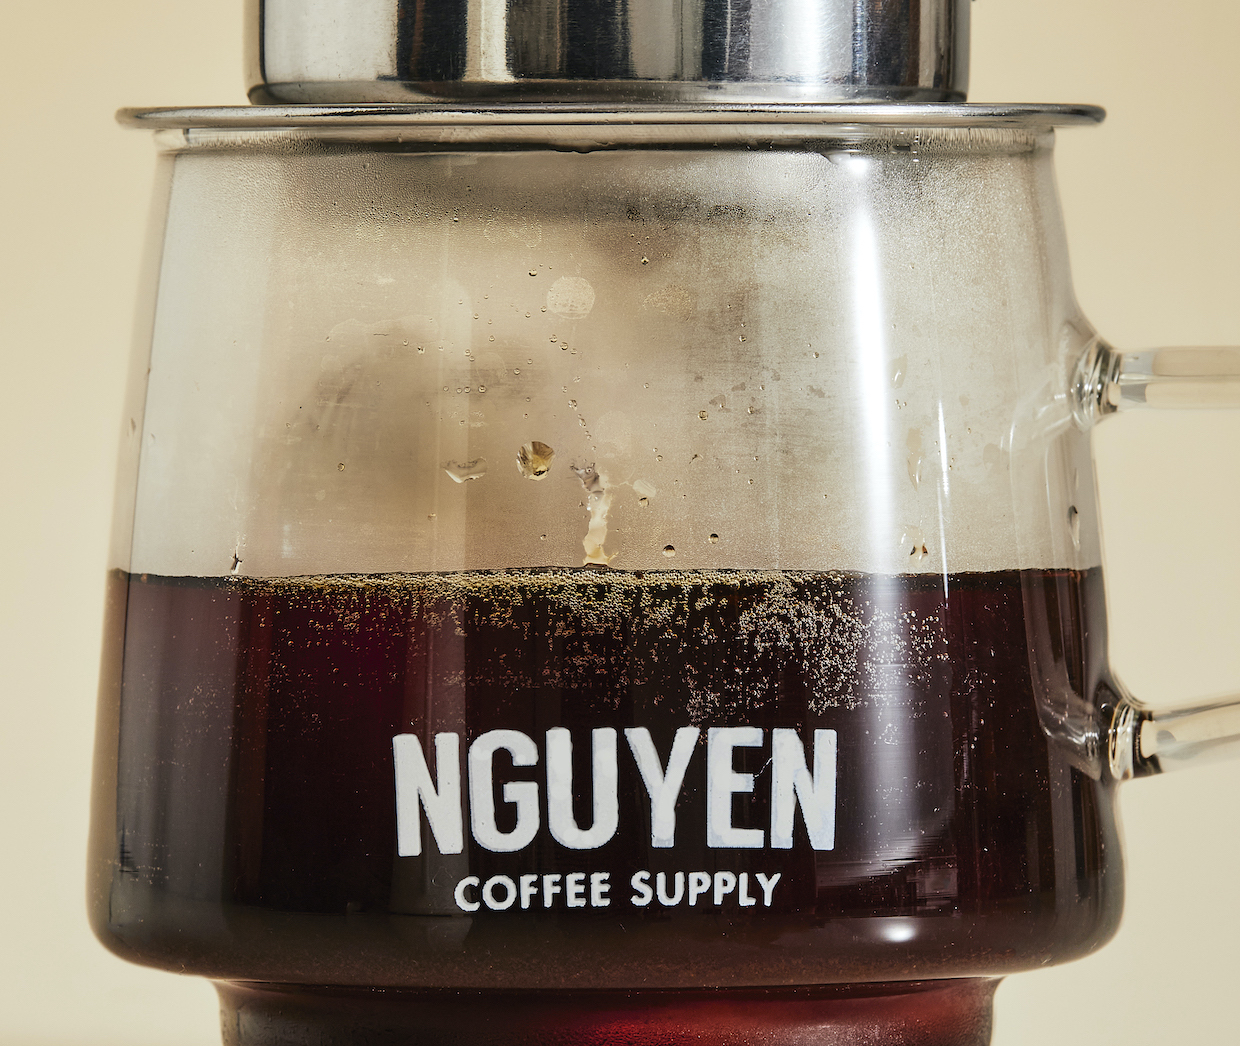 https://dailycoffeenews.com/wp-content/uploads/2022/03/Nguyen-Coffee-Supply-phin-1.jpg